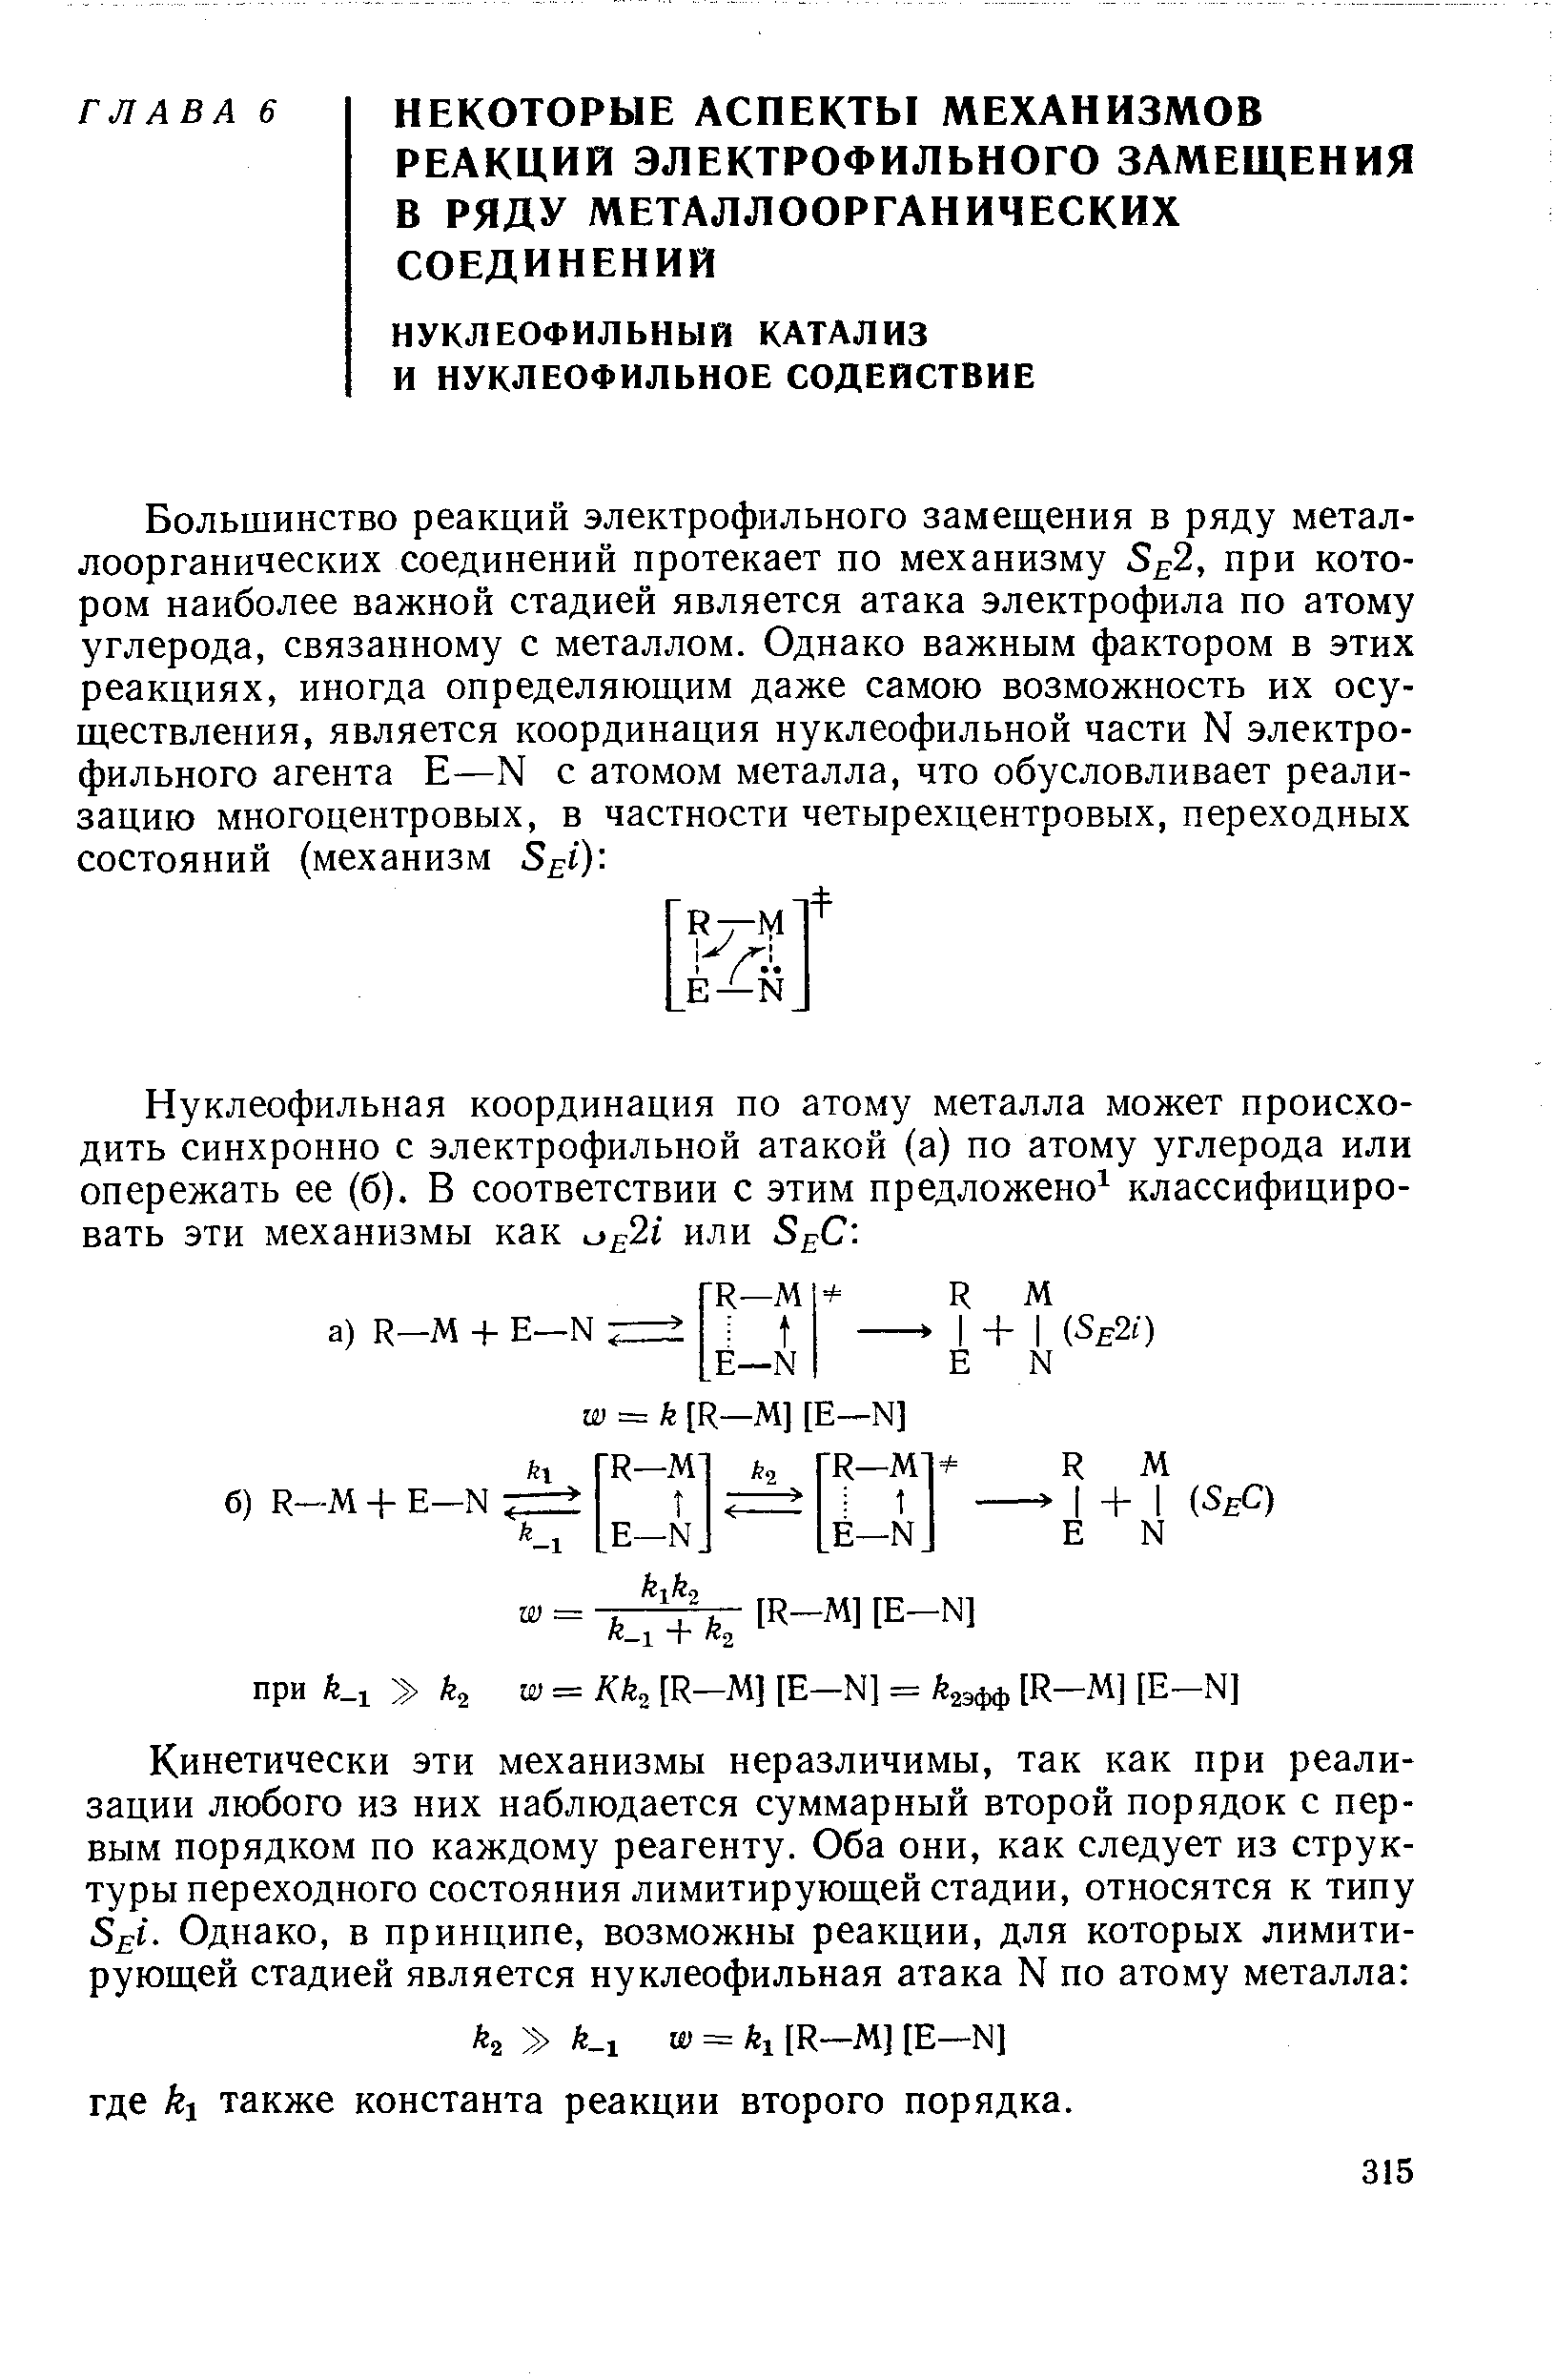 К -1 а = 1 [Н-М] [Е-Ы] где кх также константа реакции второго порядка.